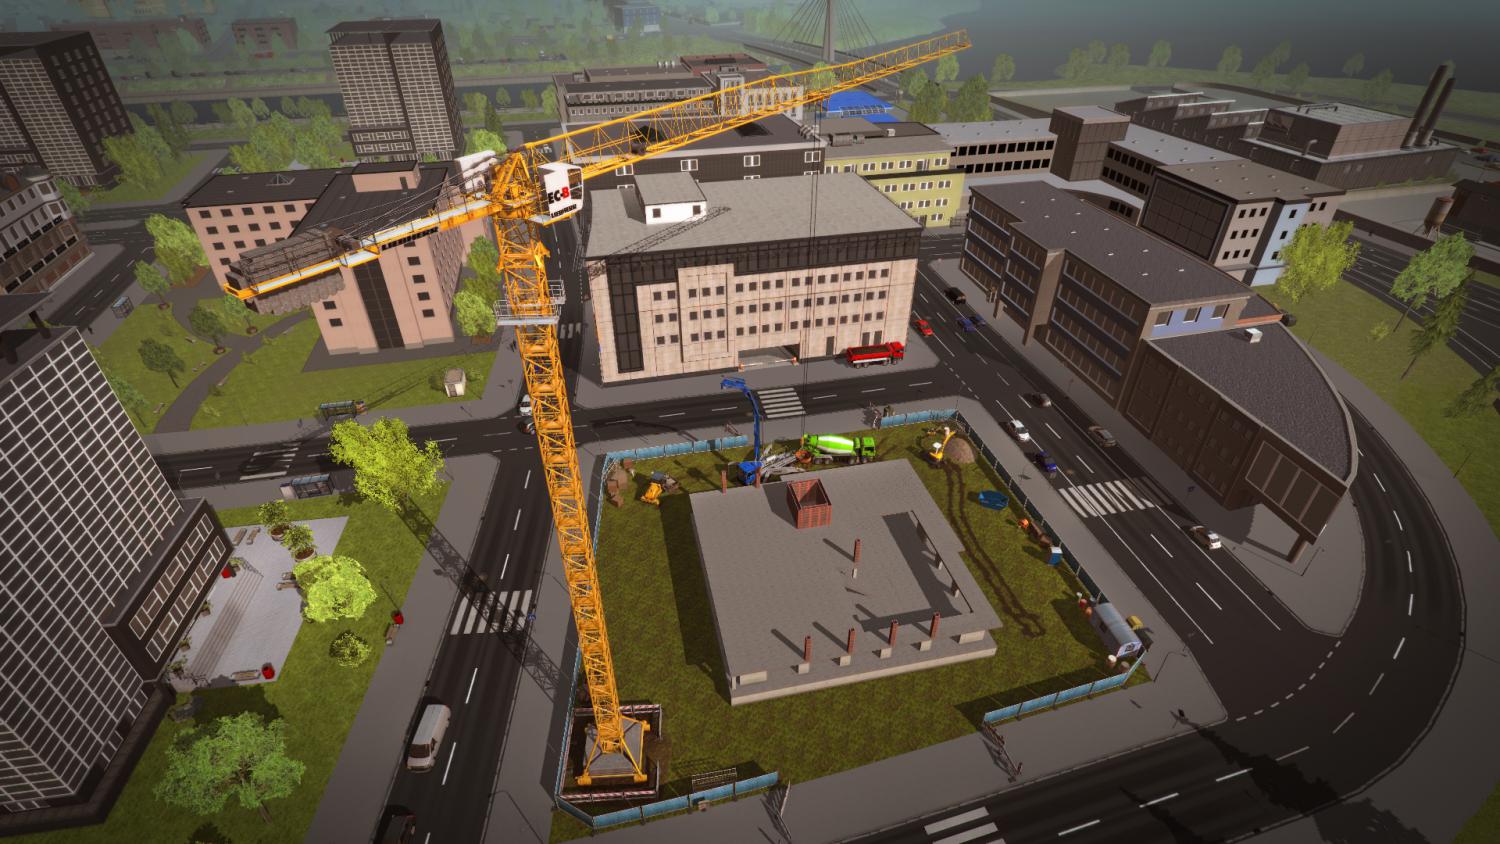 Construction Simulator 2015: Liebherr 150EC-B